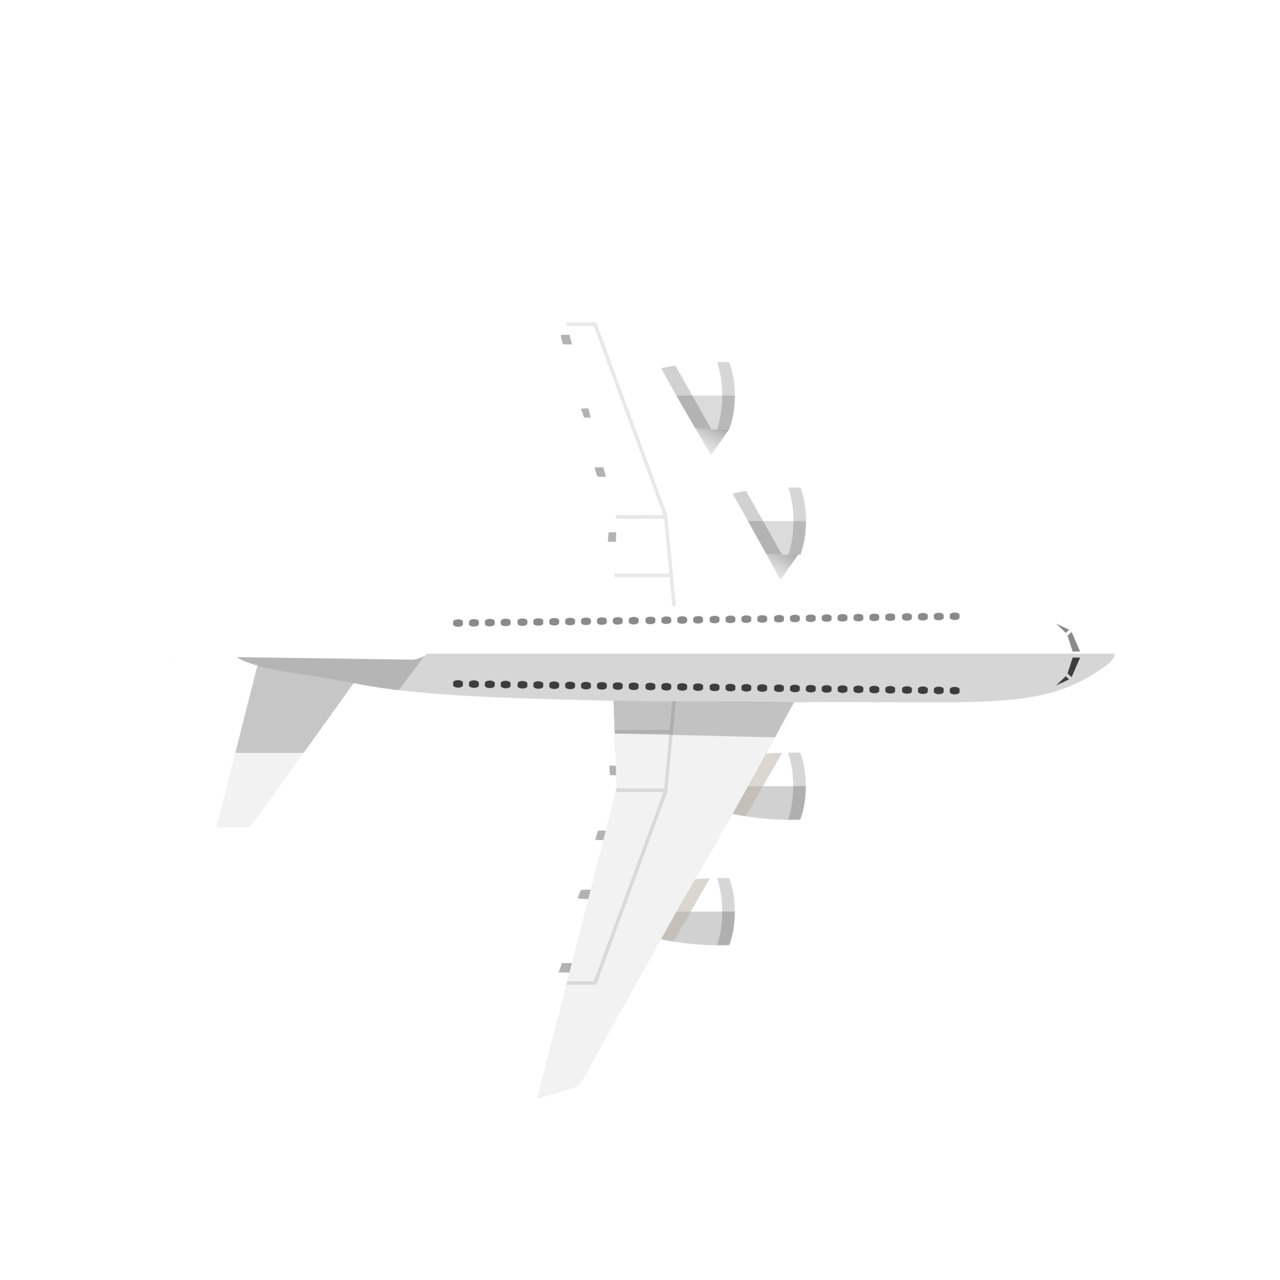 Aerospace manufacturer, Air travel, Aircraft, Vehicle, Airplane, Aviation, Flap